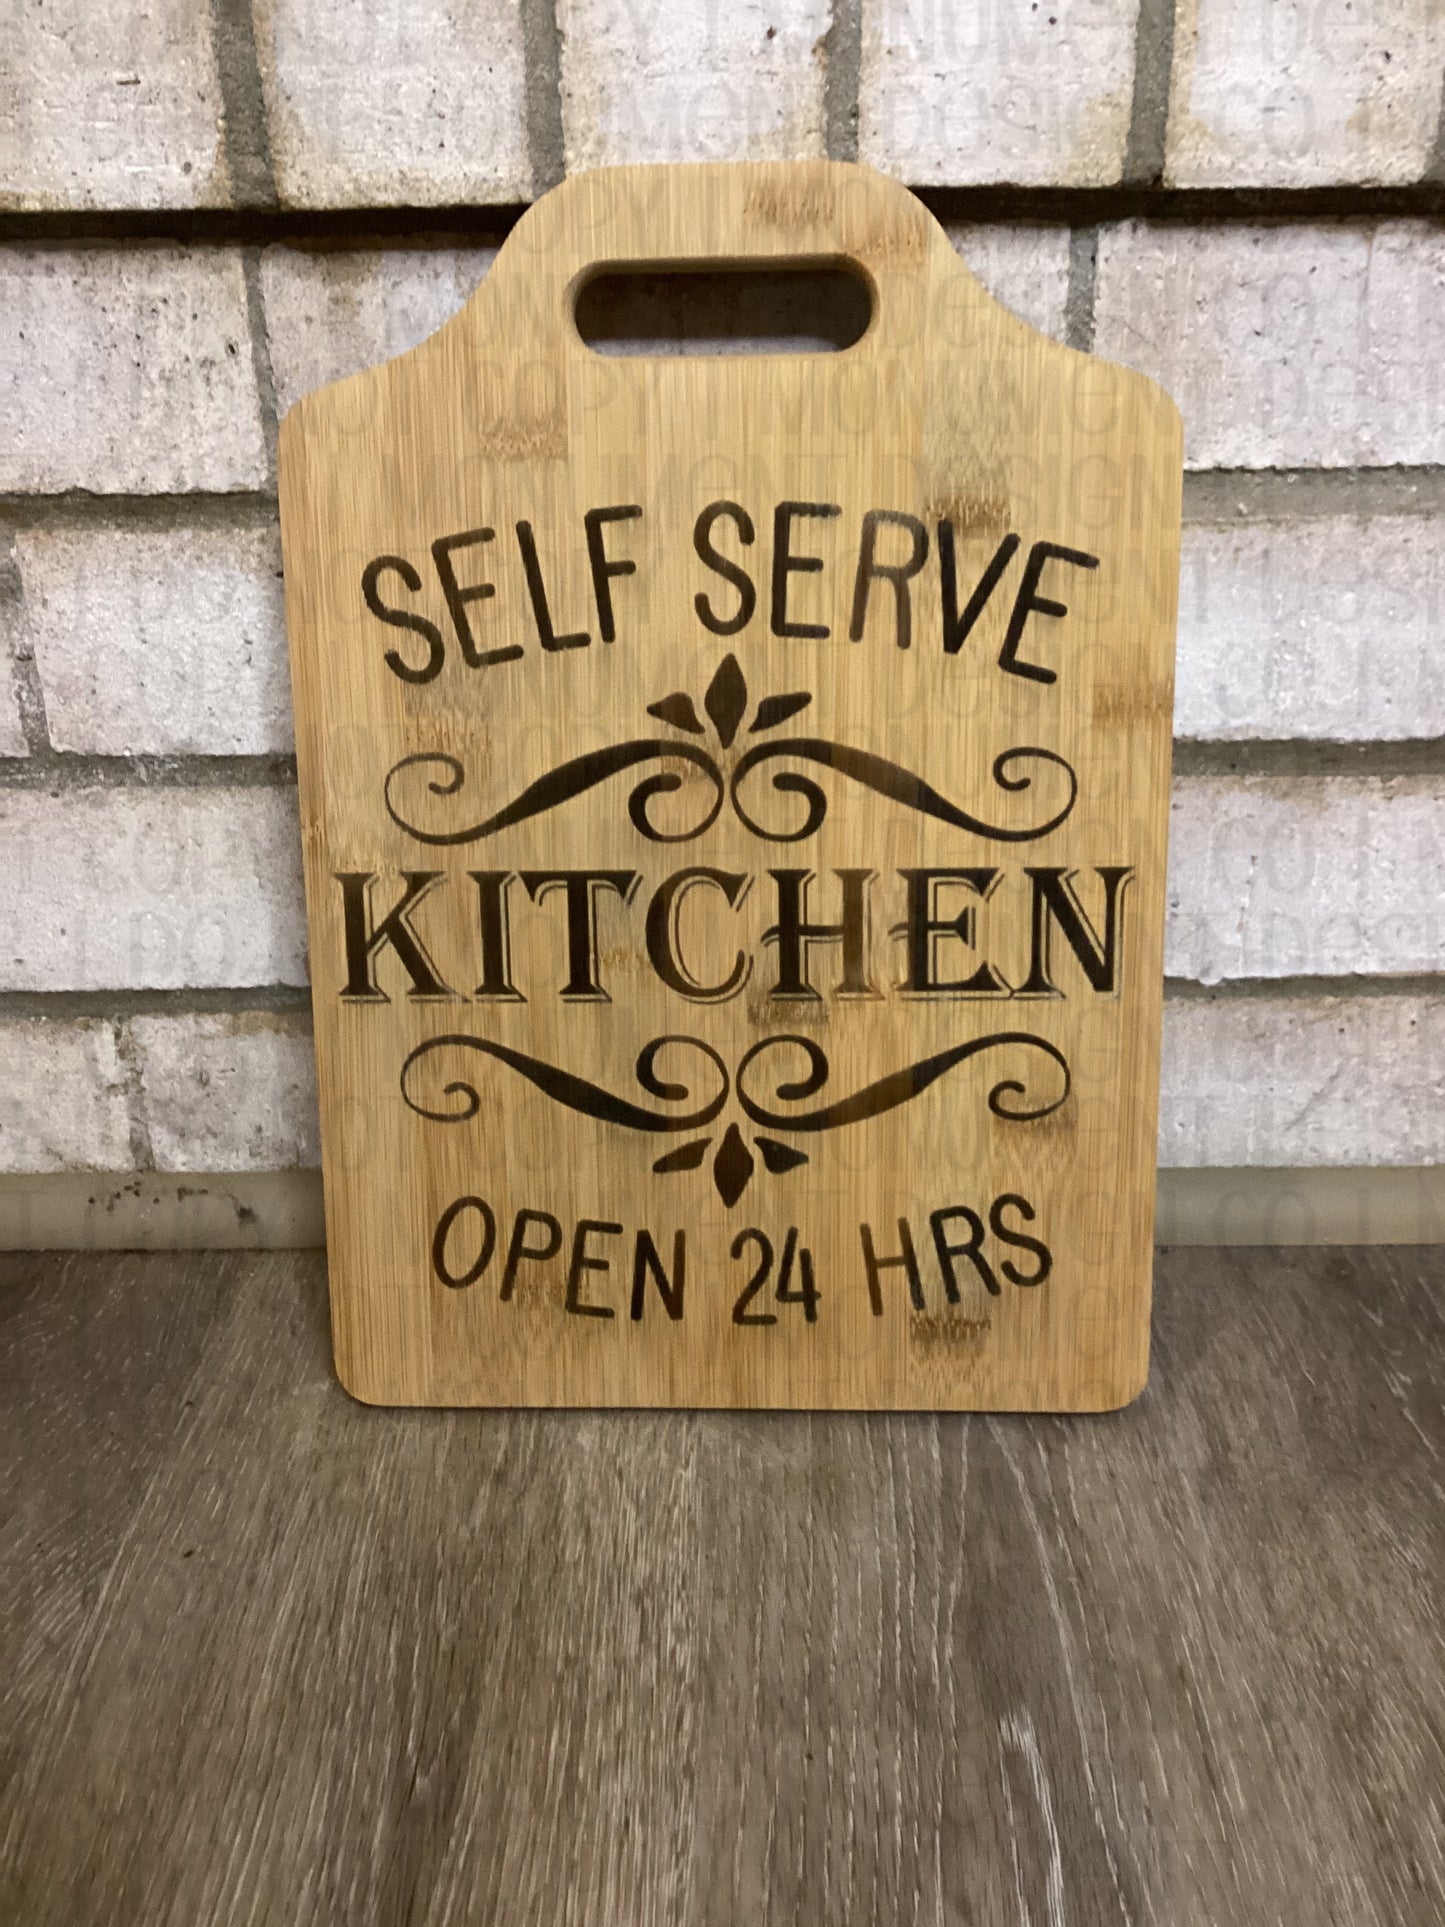 Self Serve Kitchen Cutting Board